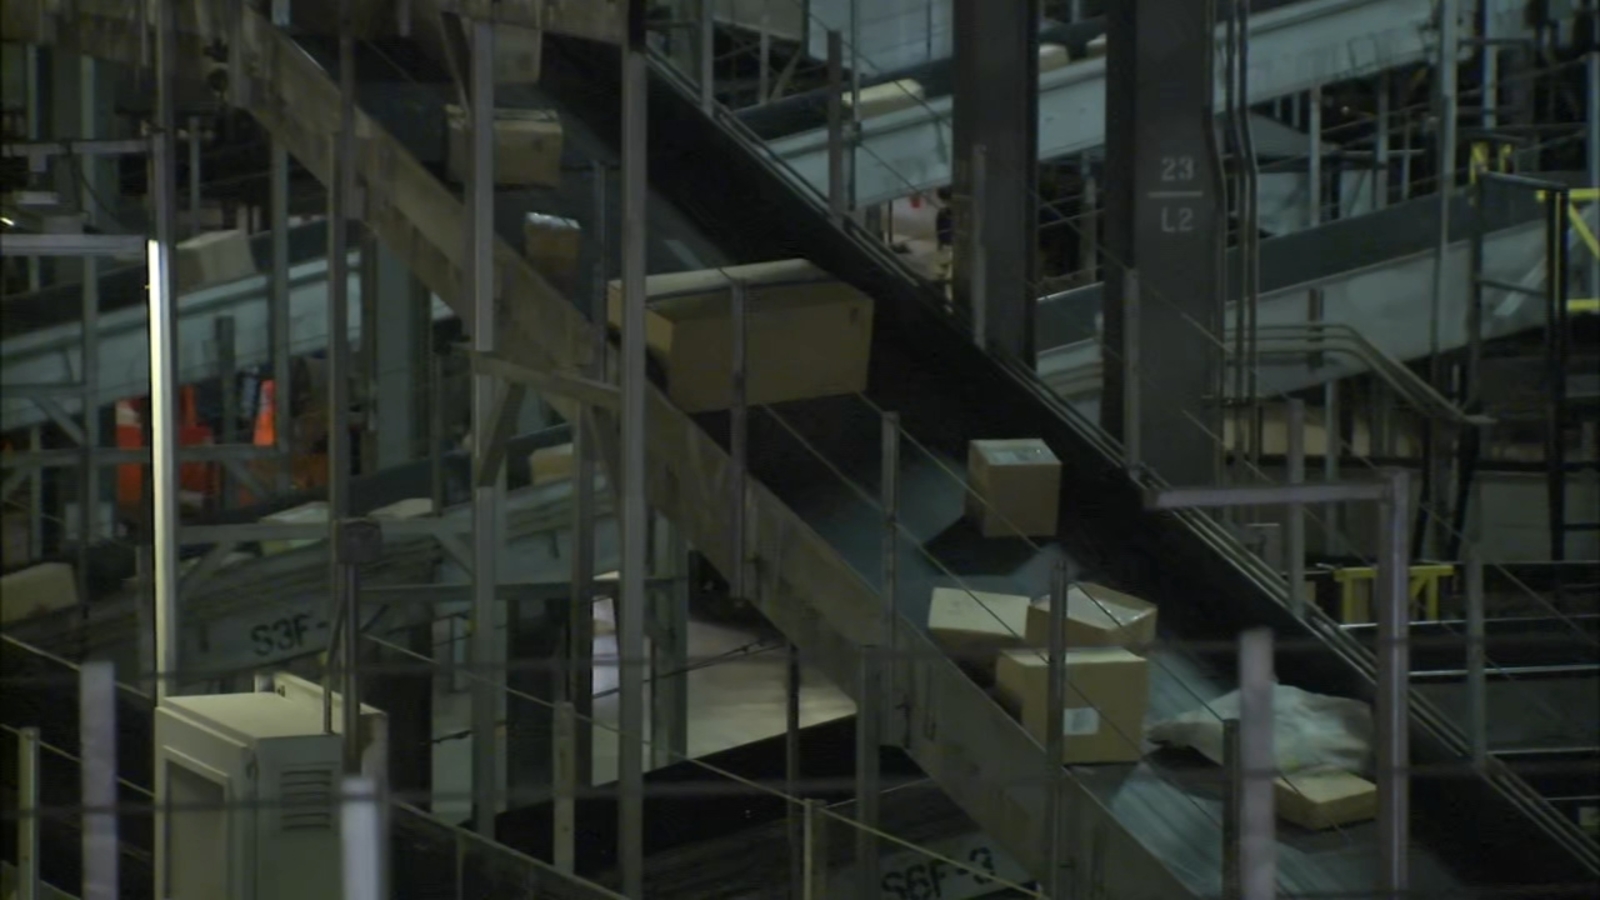  UPS gears up for holiday shipping at Hodgkins facility 